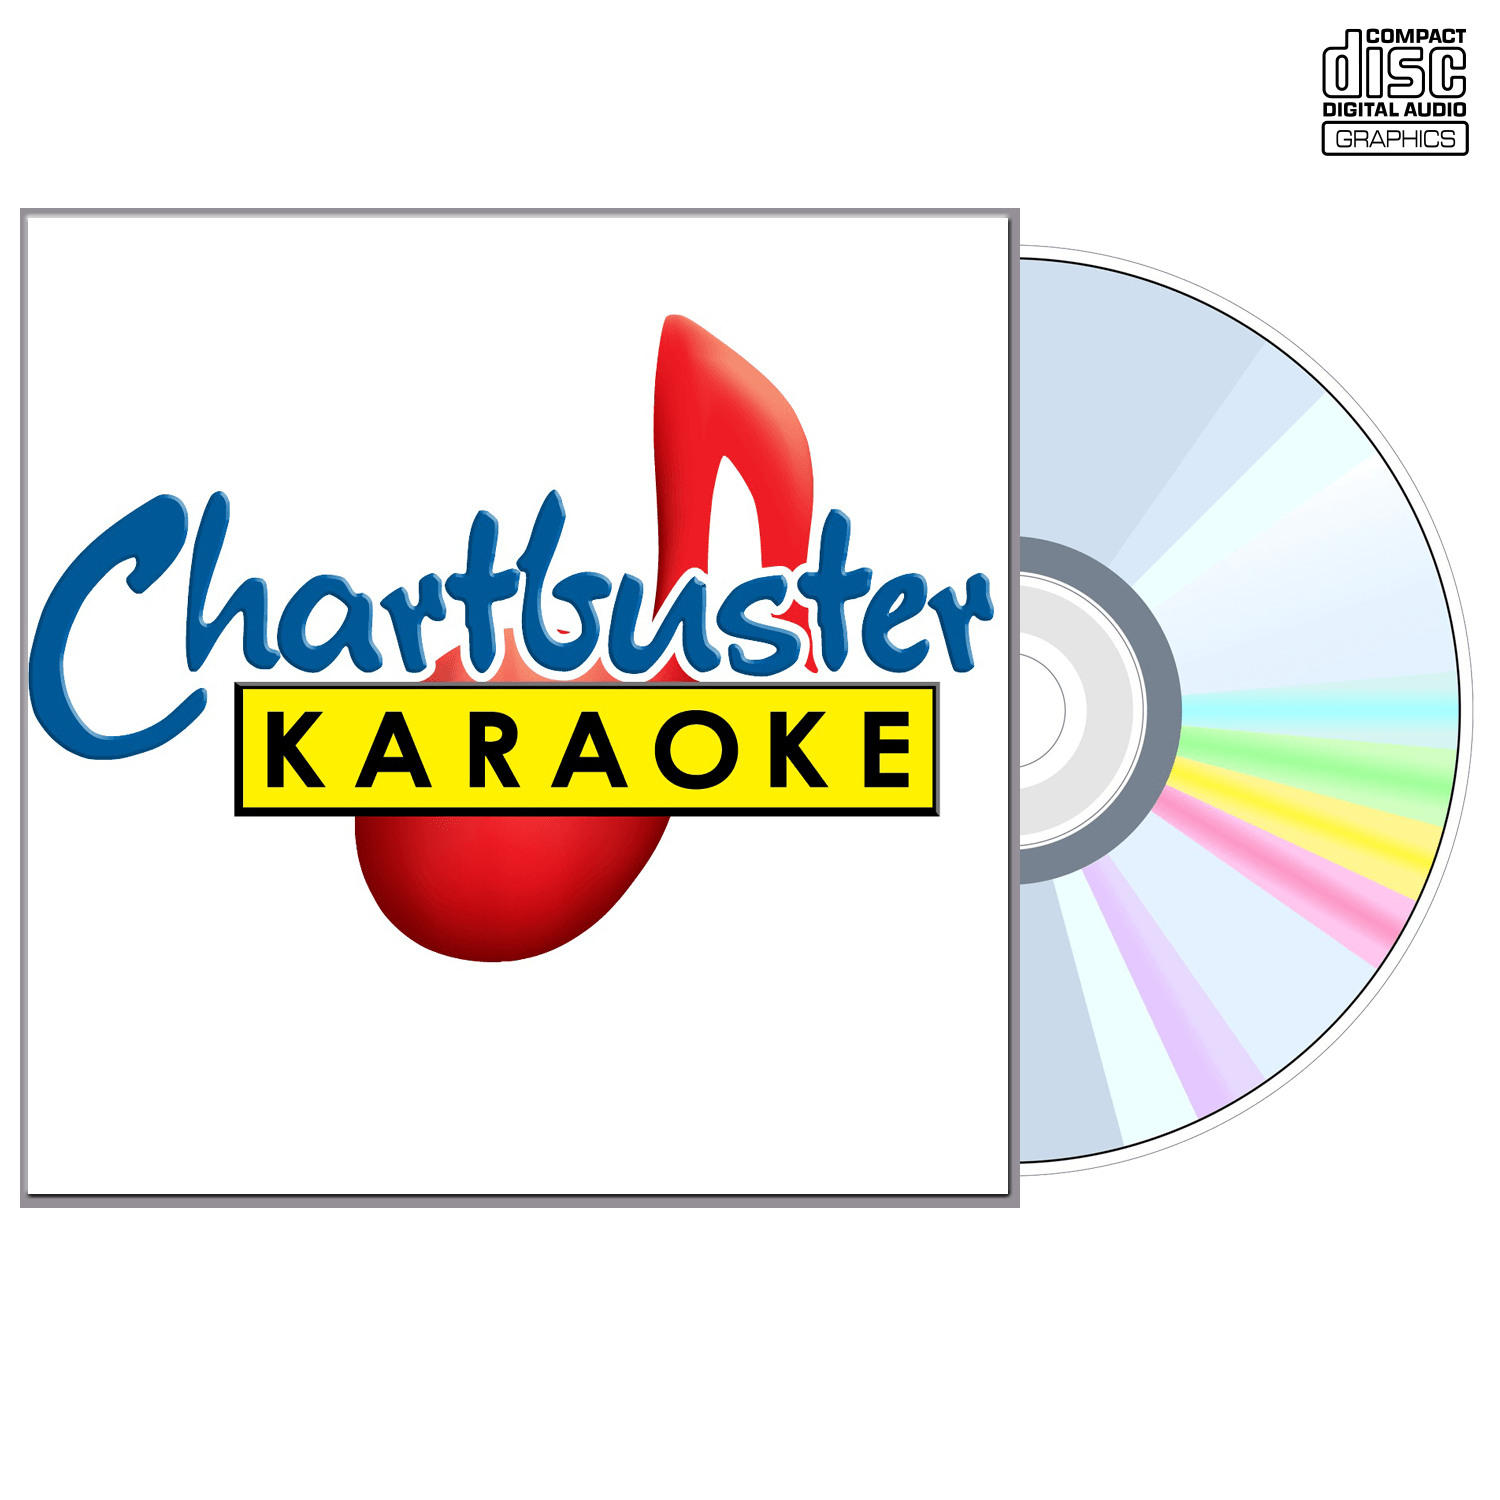 Sounds Of Sixties Vol 11 - CD+G - Chartbuster Karaoke - Karaoke Home Entertainment